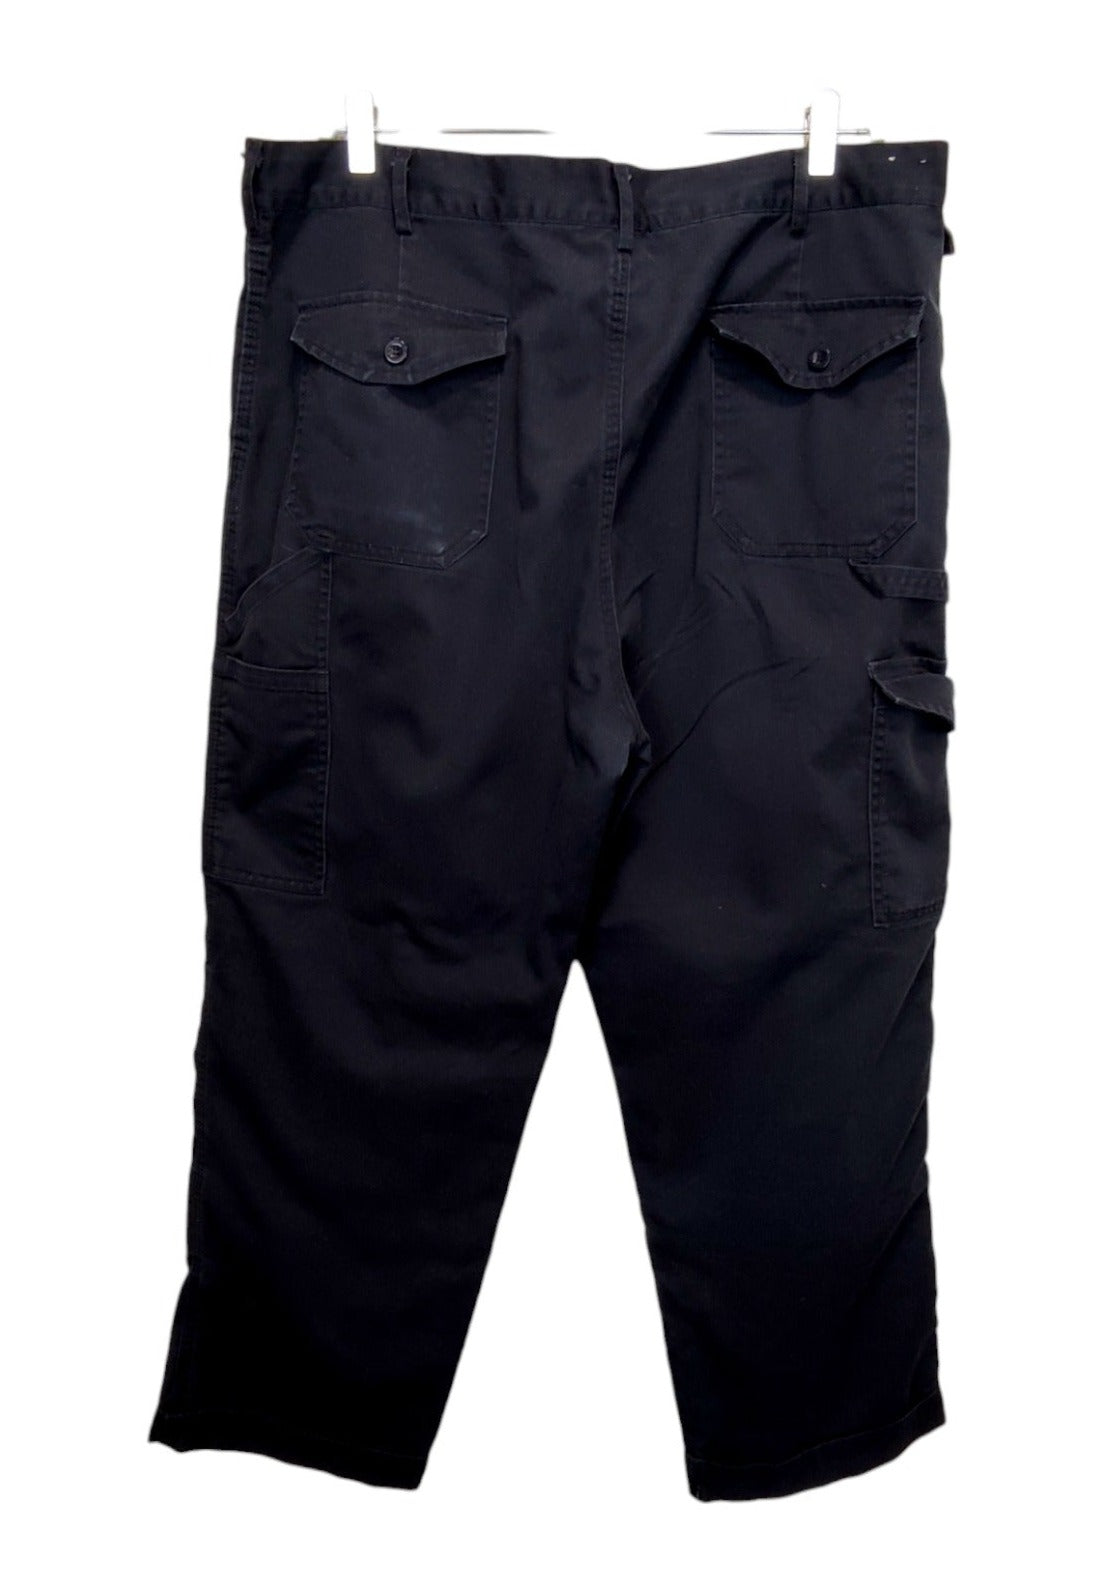 Aνδρικό, Cargo Παντελόνι DICKIES σε Σκούρο Μπλε χρώμα (No 38S - XL/2XL)